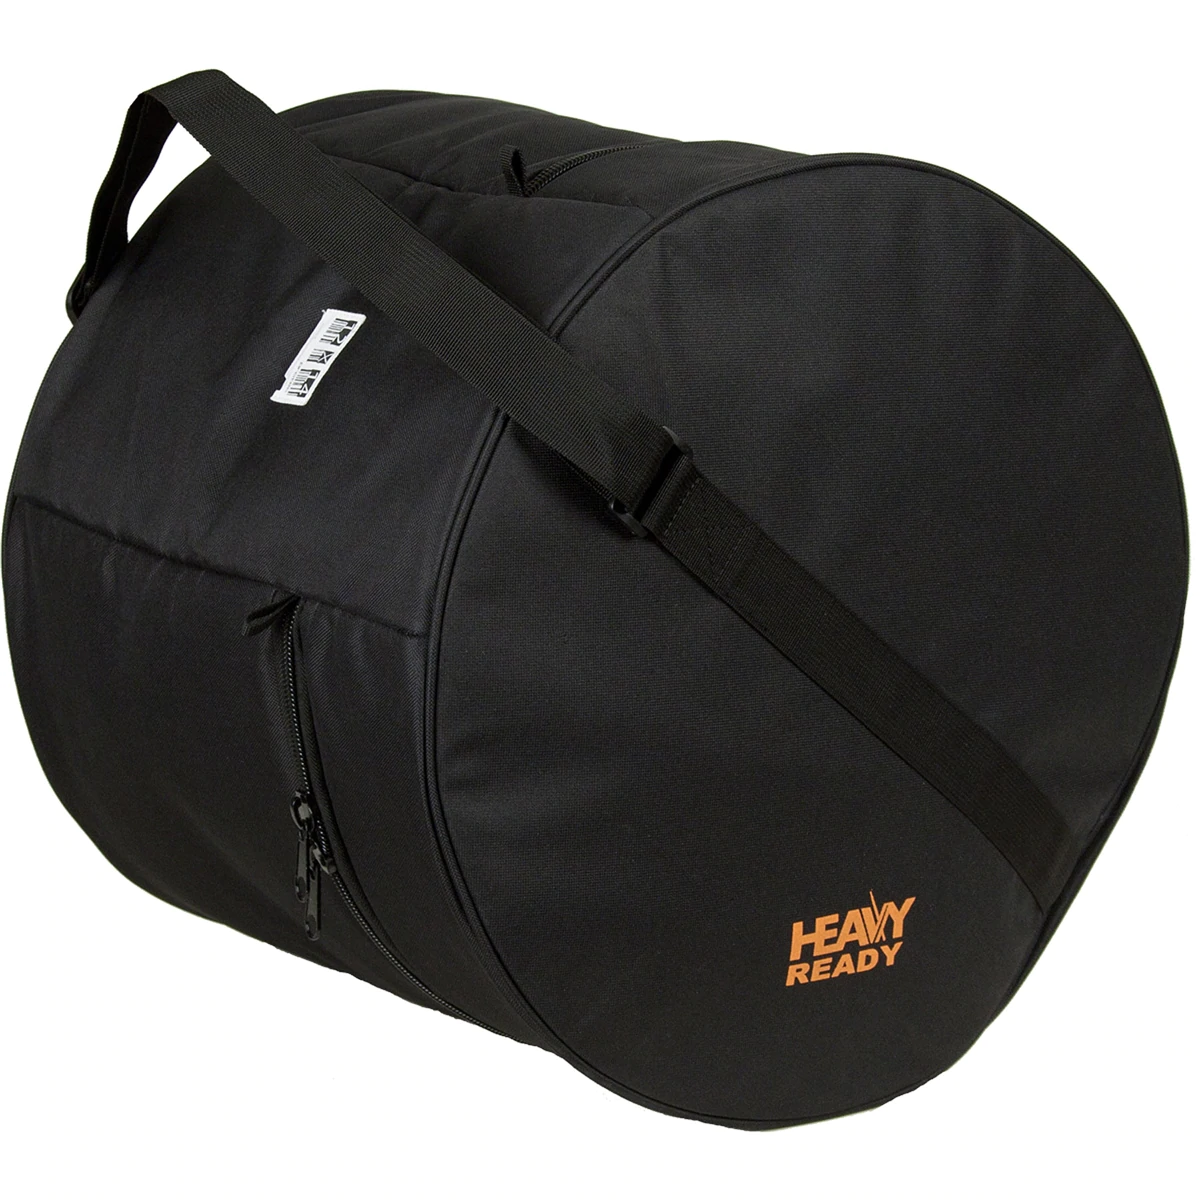 PROTEC Heavy Ready Padded  Tom Bag 14x12